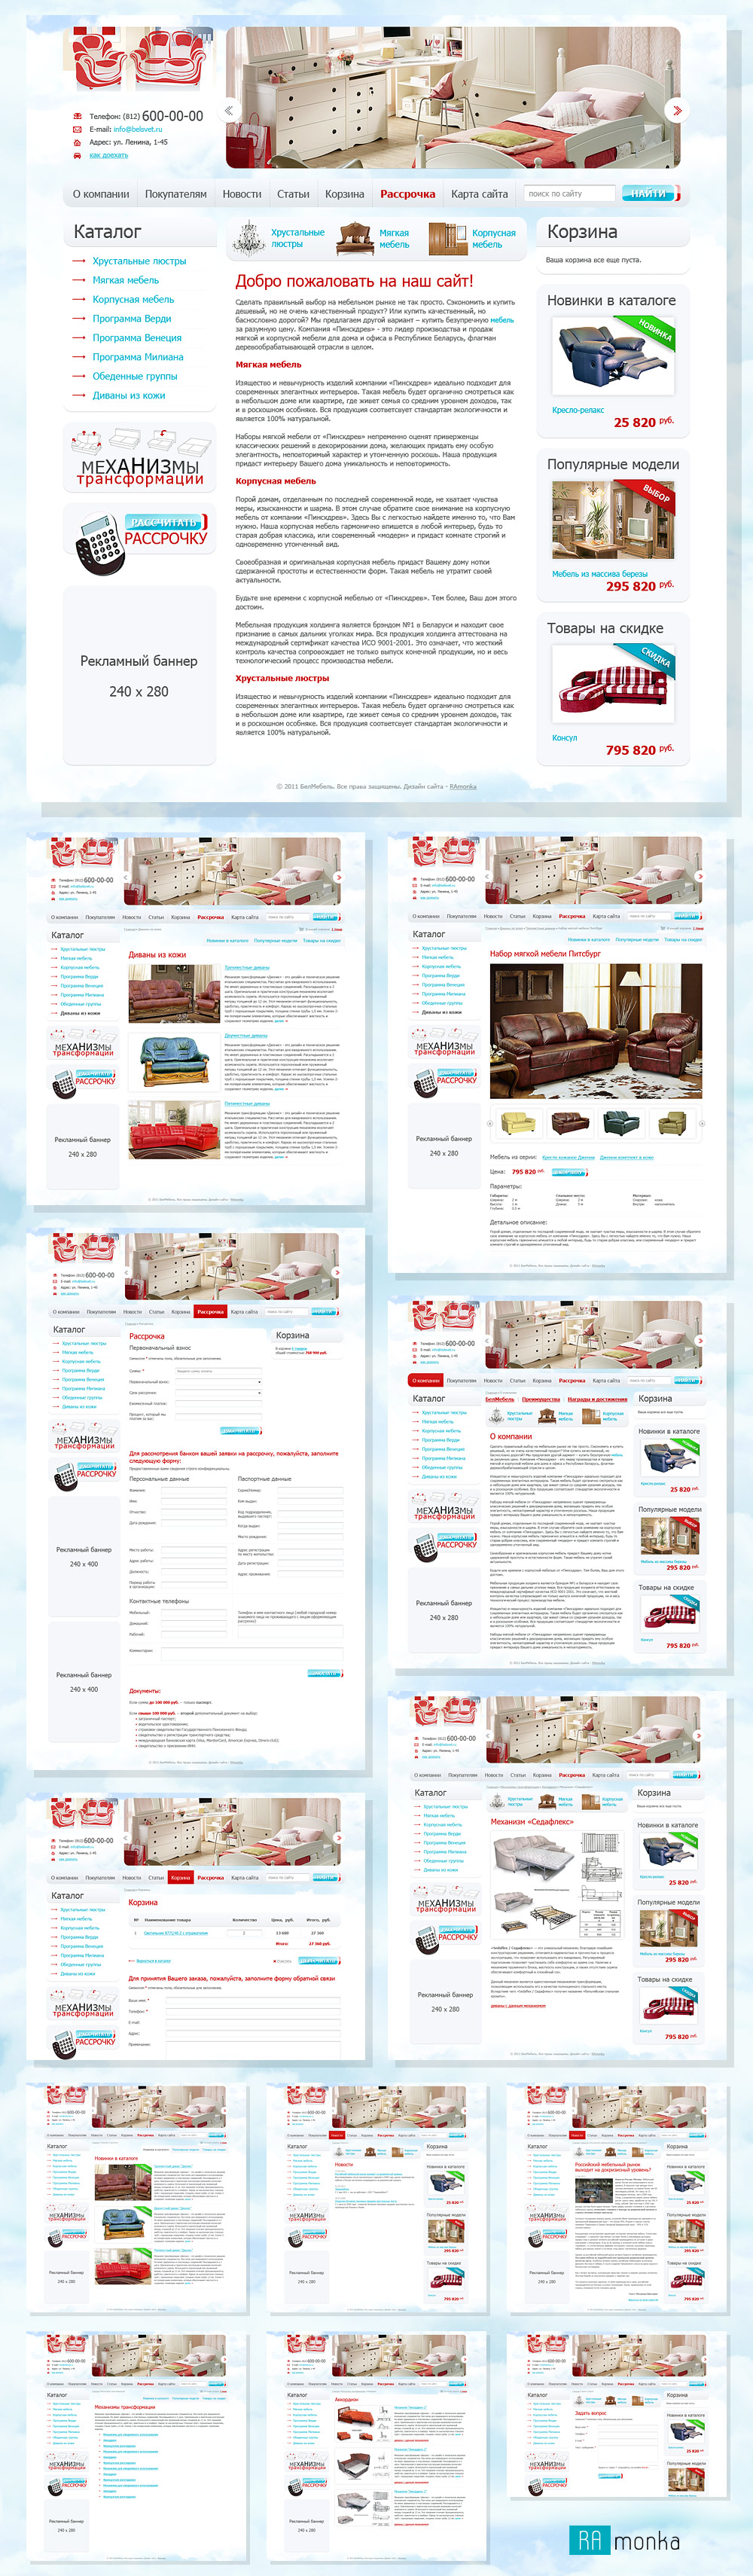 Web Design for Furniture Store BelMebel